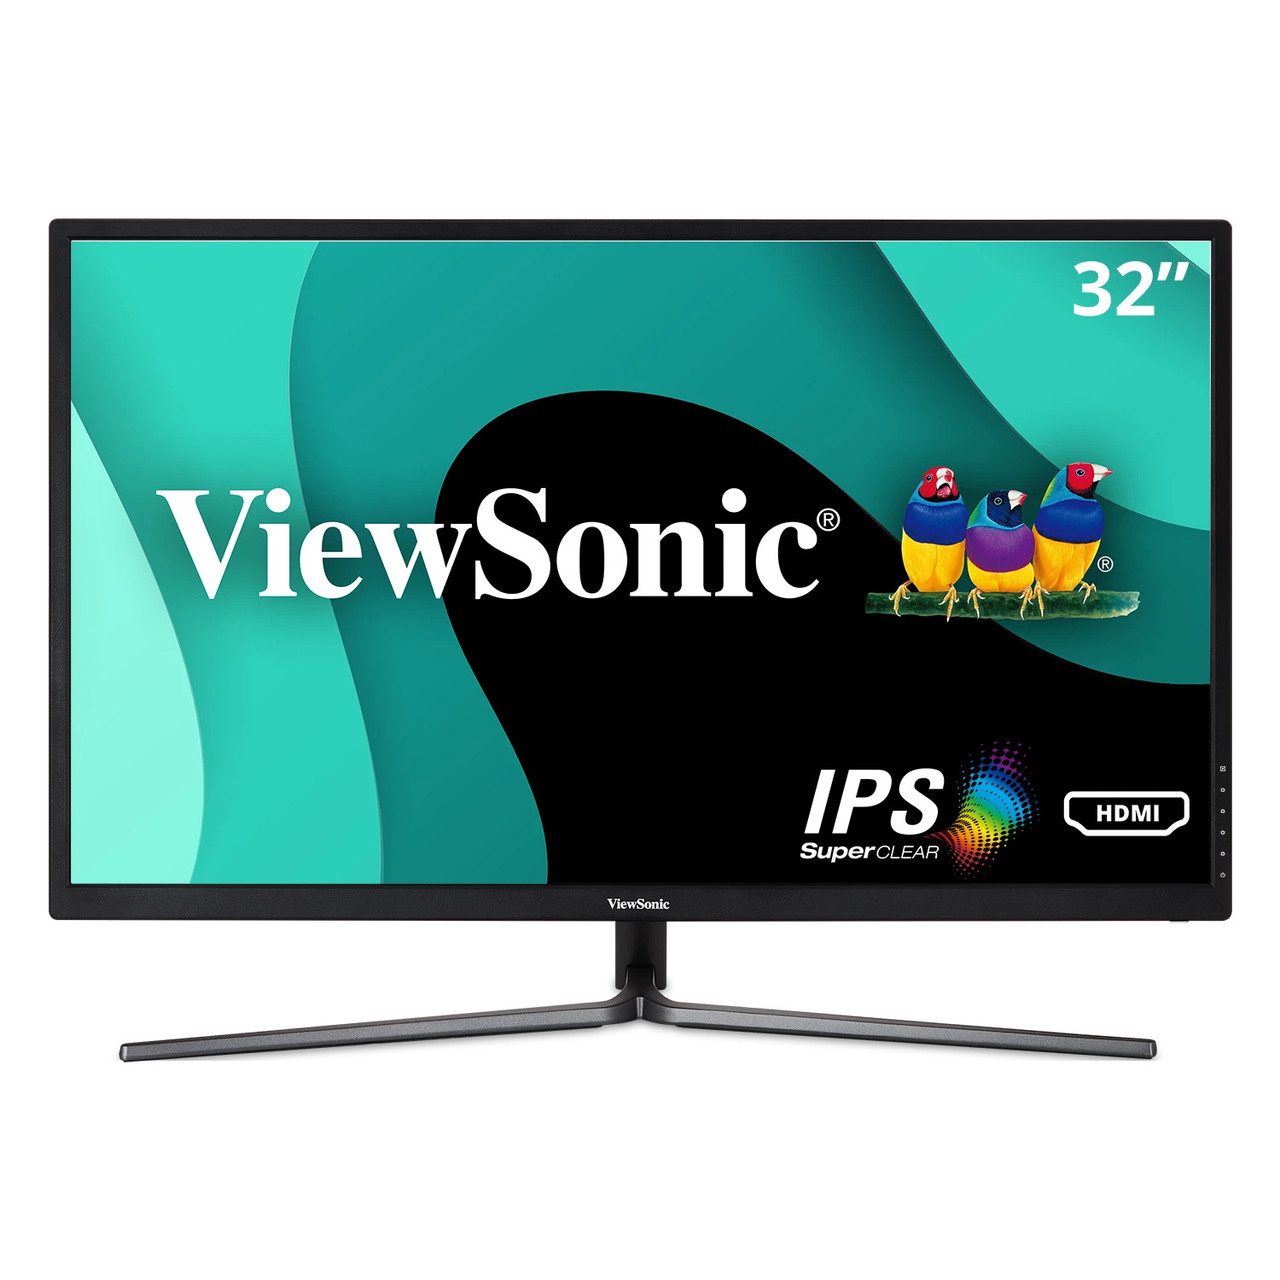 Viewsonic 32" 1440p IPS Monitor with HDMI, DisplayPort, VGA and sRGB